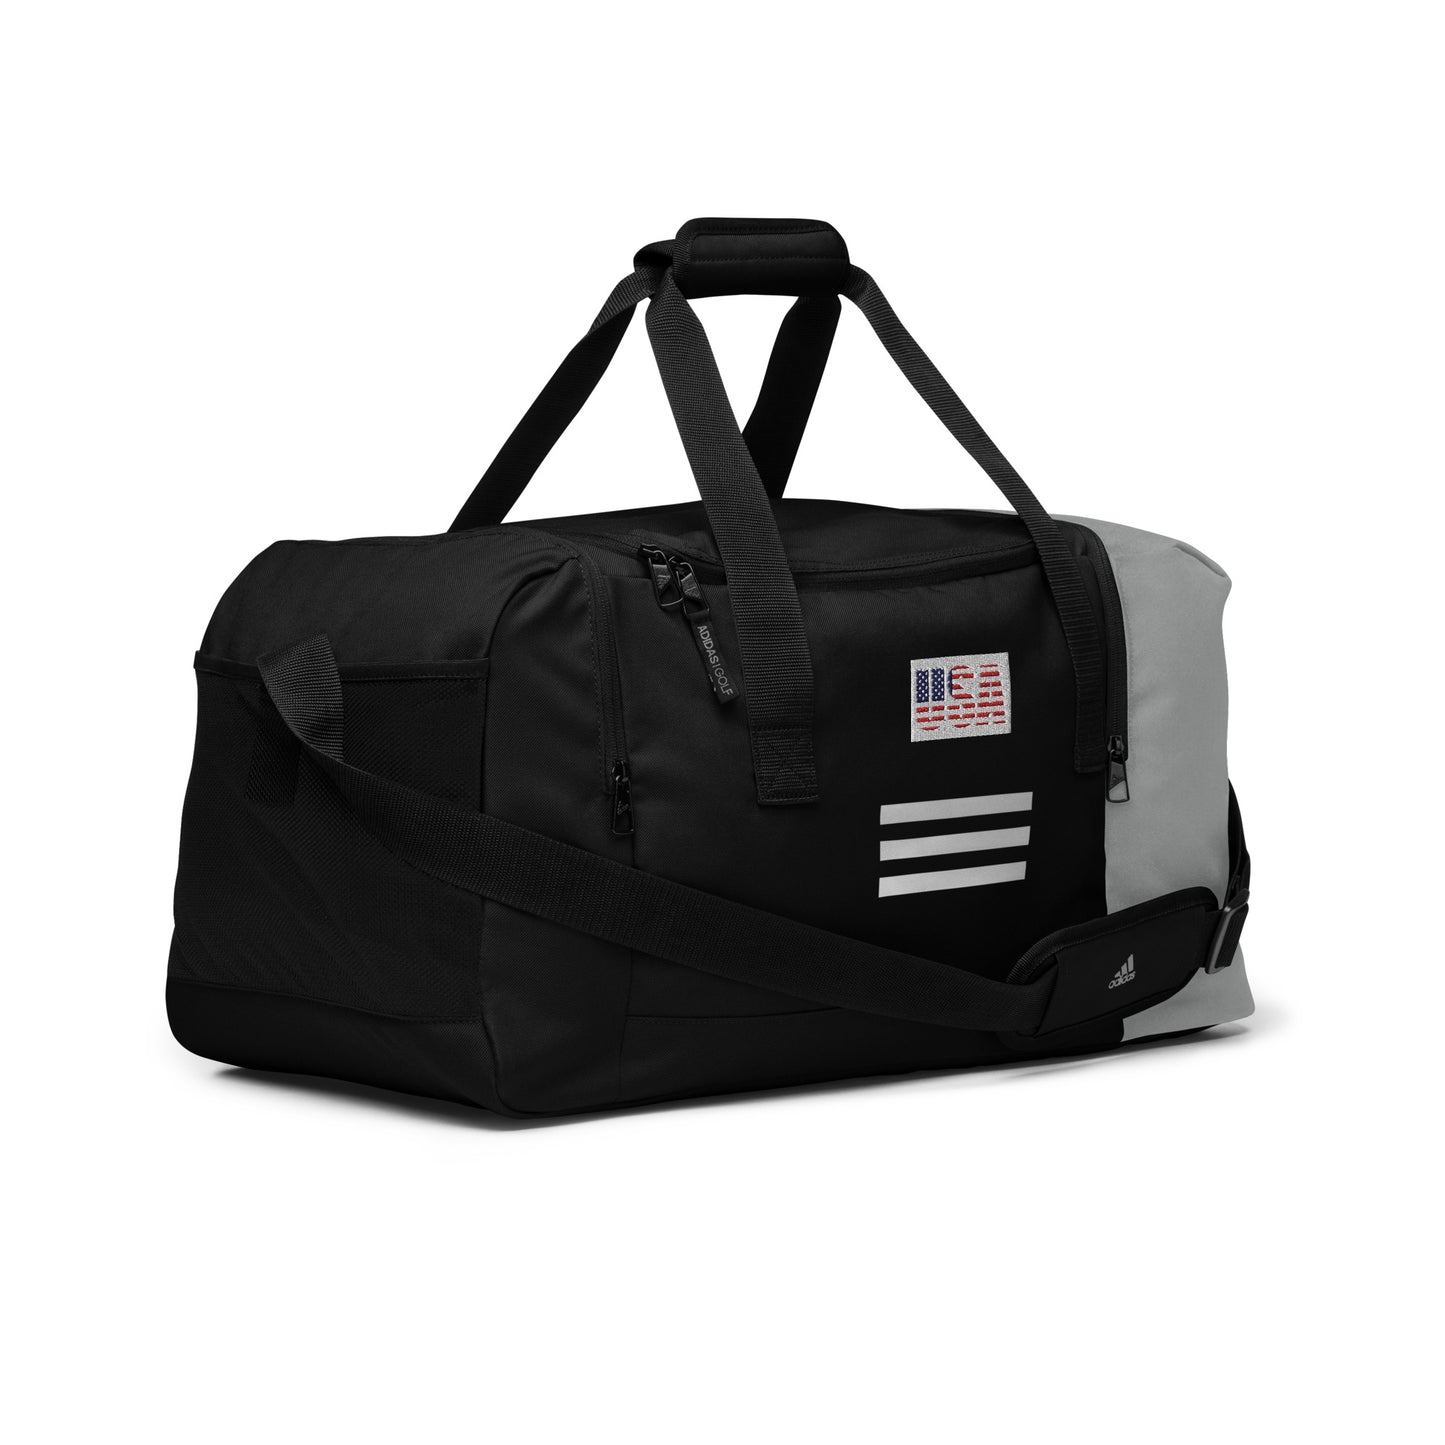 adidas duffle bag with USA flag logo design (shipping to US, Canada & Europe)